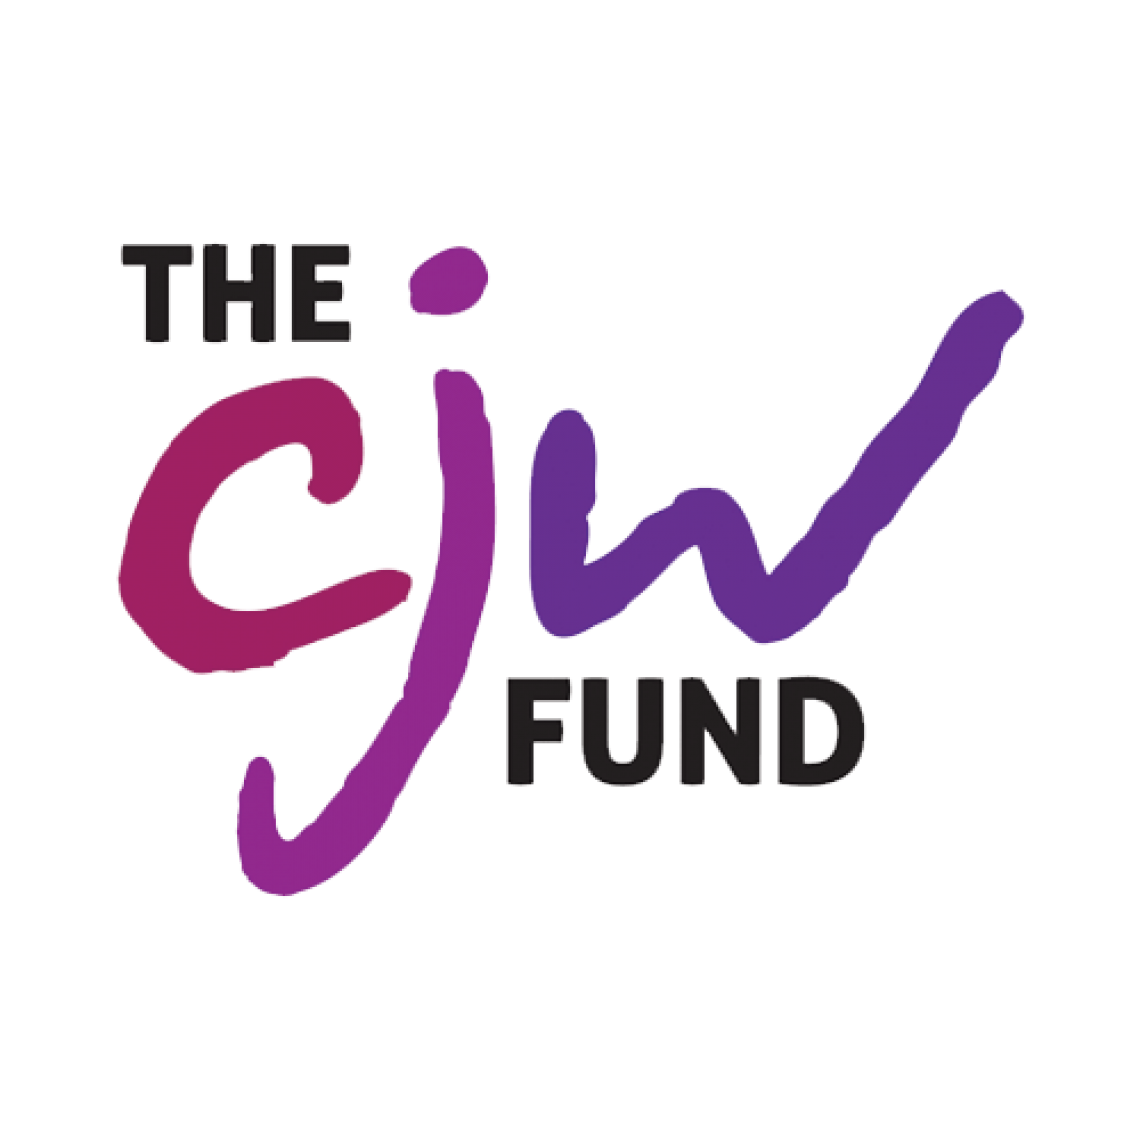 The cjw Fund logo